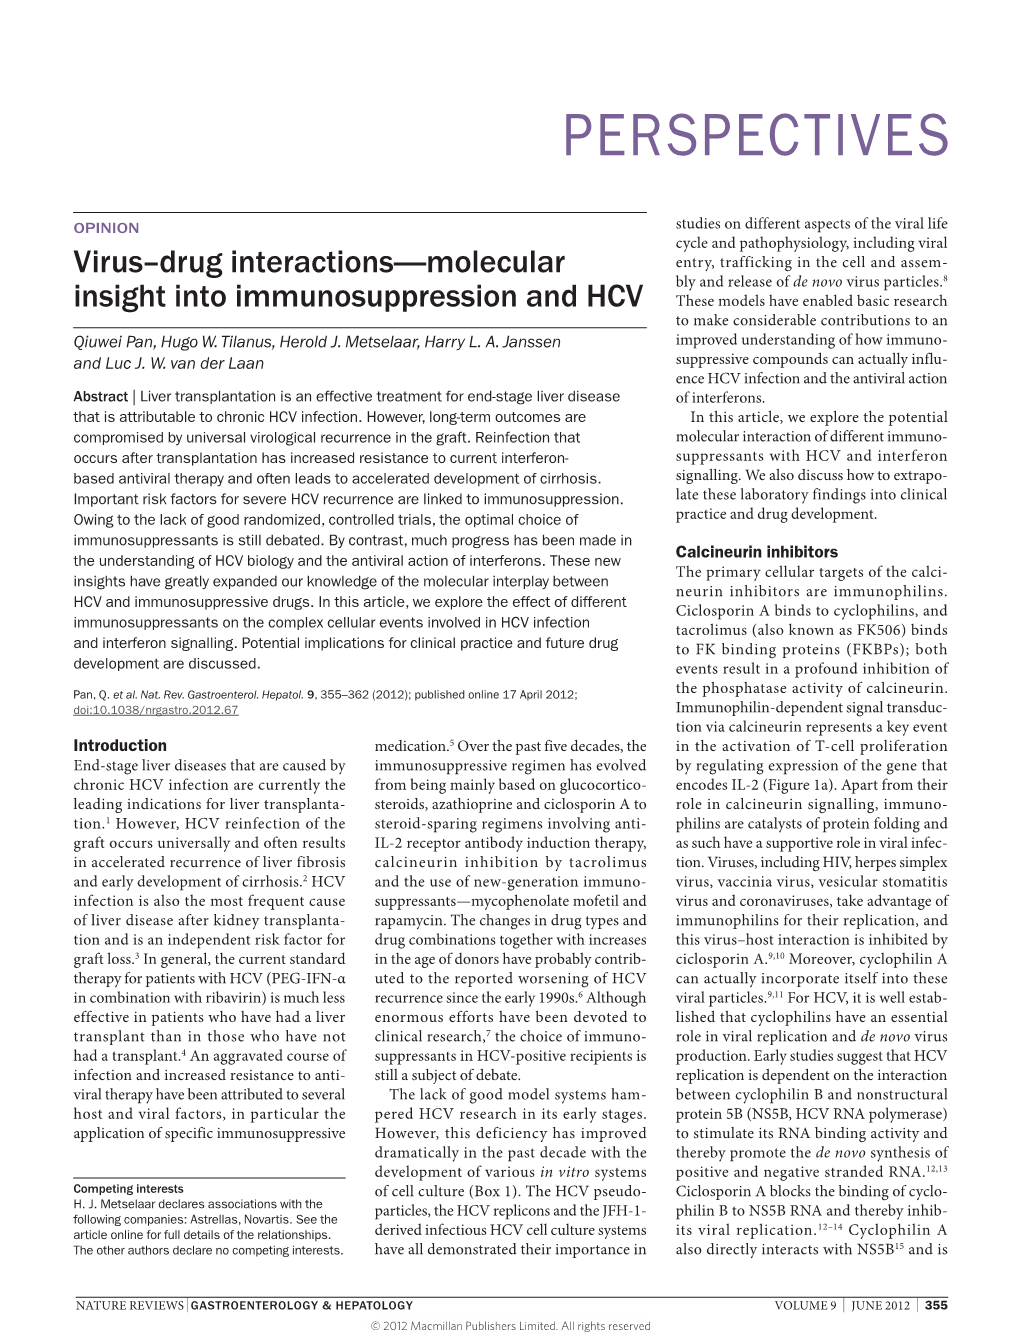 Virus–Drug Interactions—Molecular Insight Into Immunosuppression